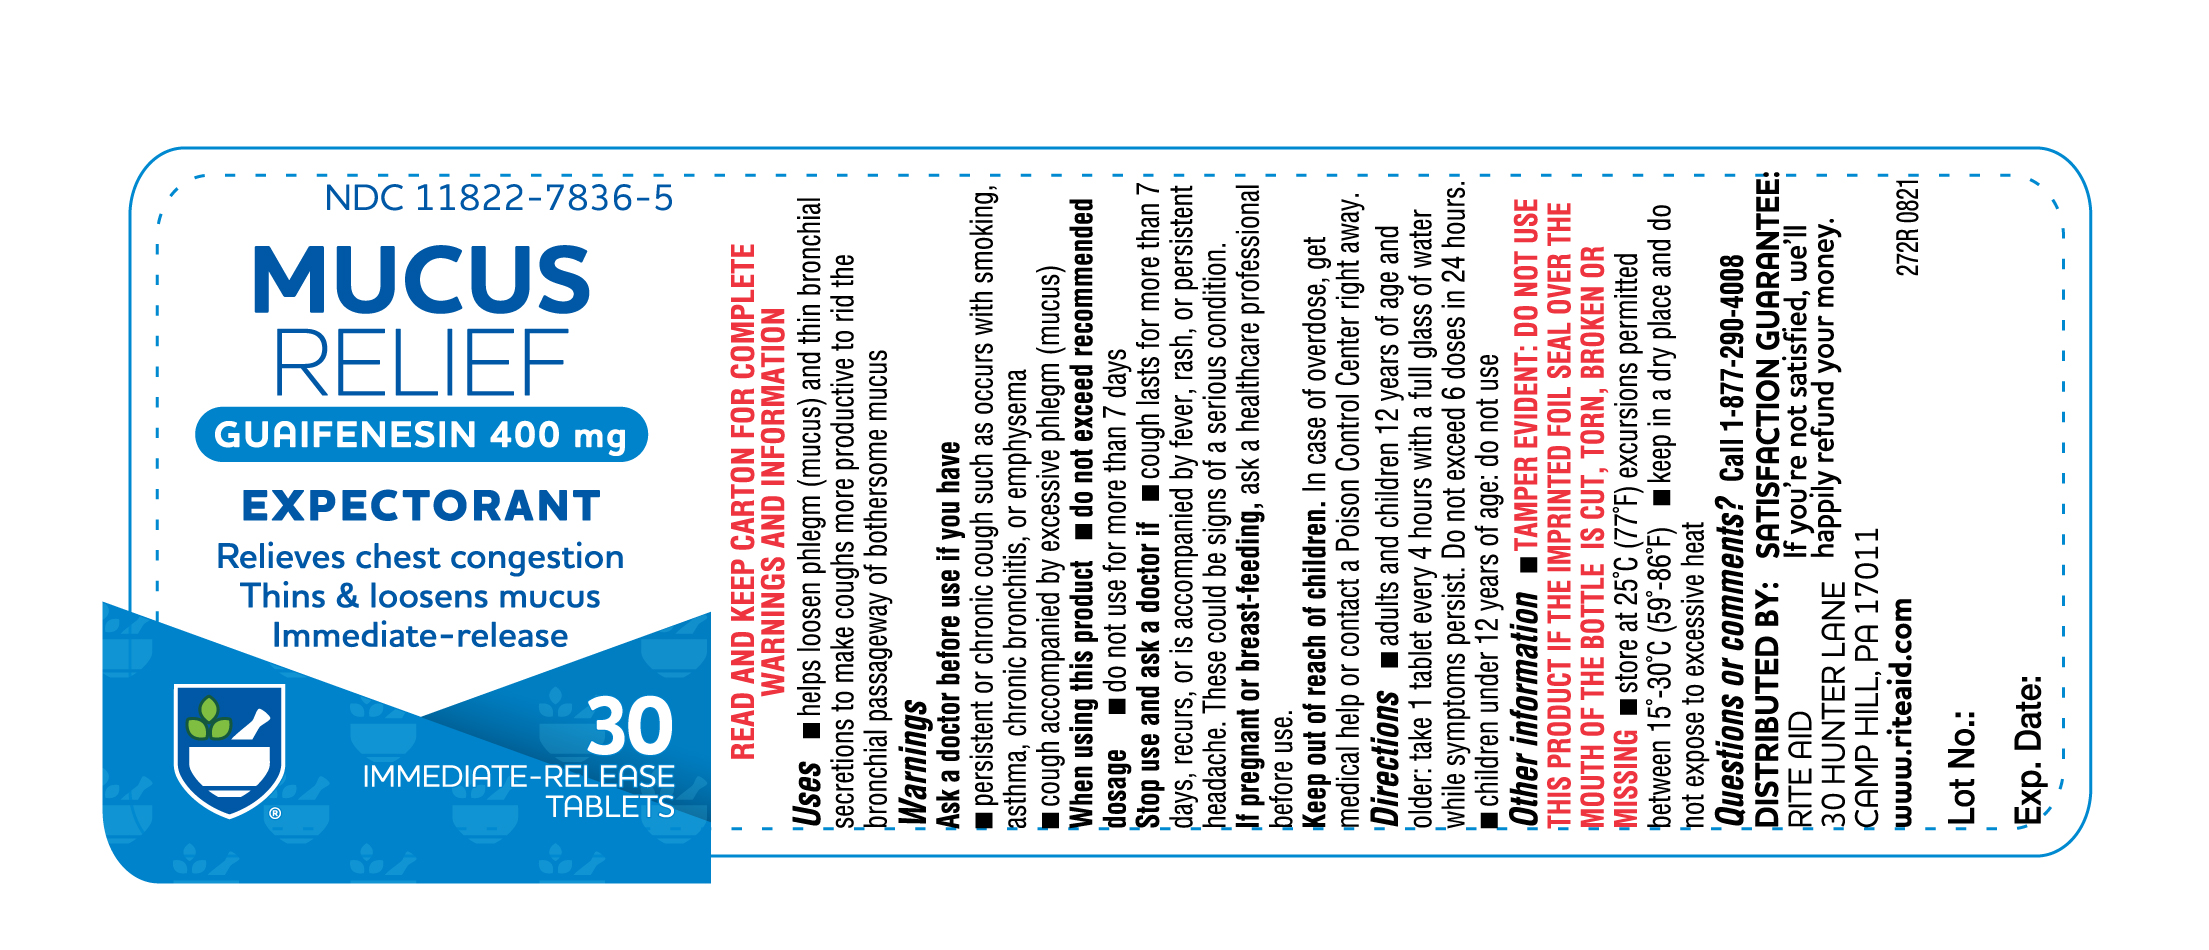 272R-Rite Aid-Mucus Relief-bottle label-30s